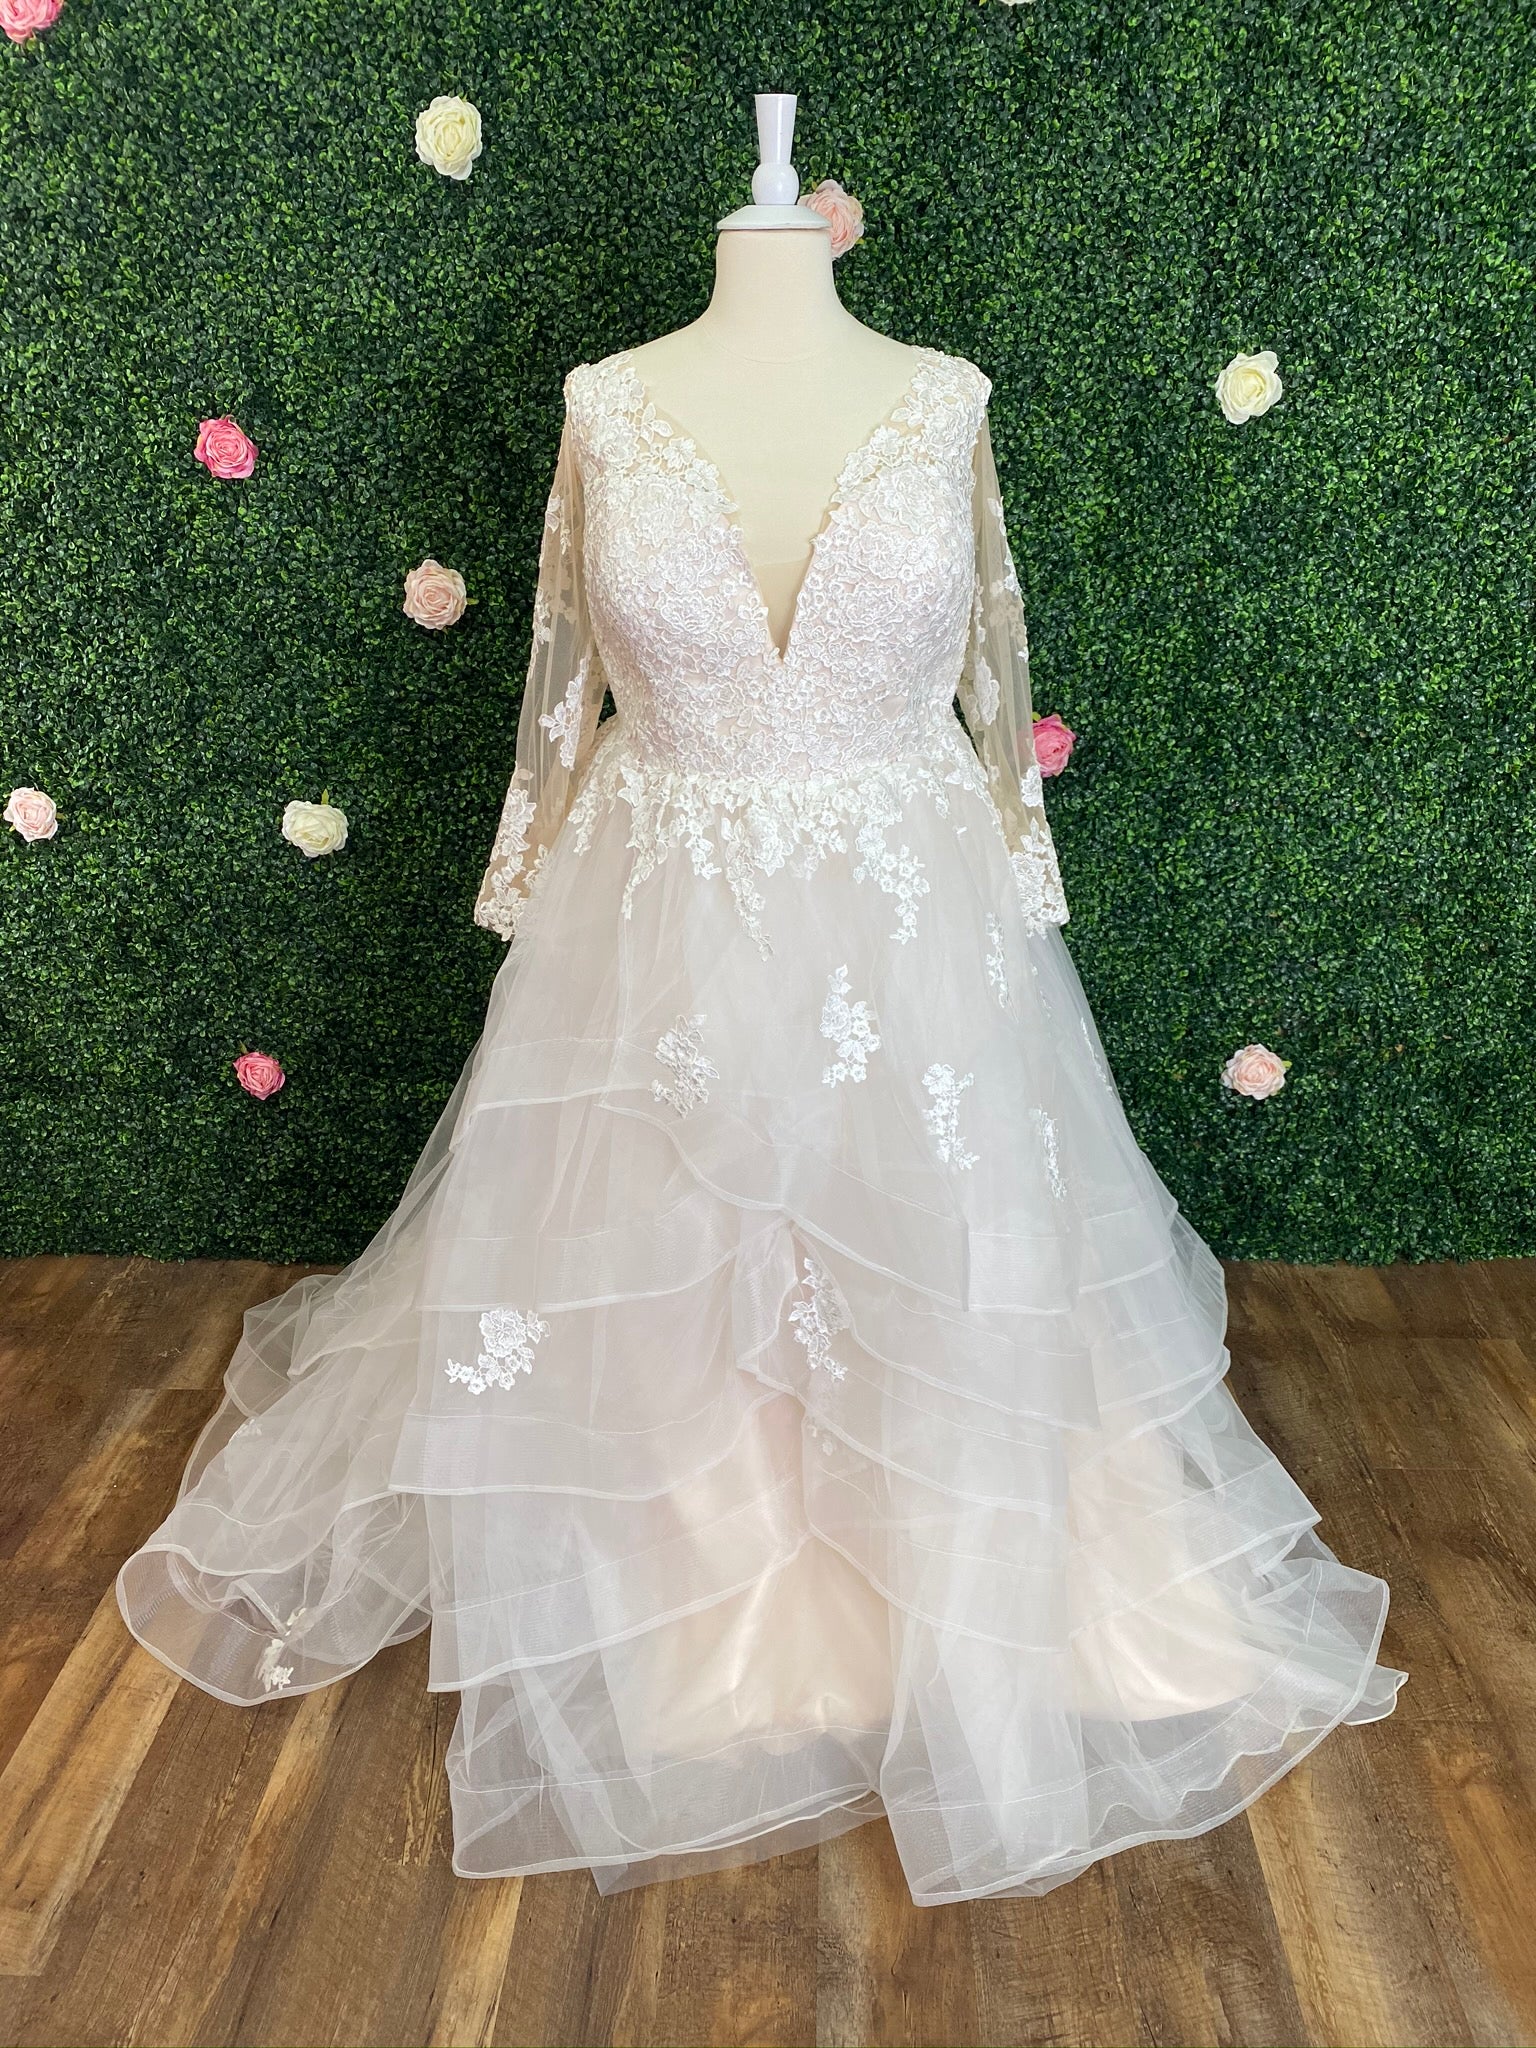 20 Wedding Dresses Under $1,500  Unique Bridal Gowns Under 1500 Dollars